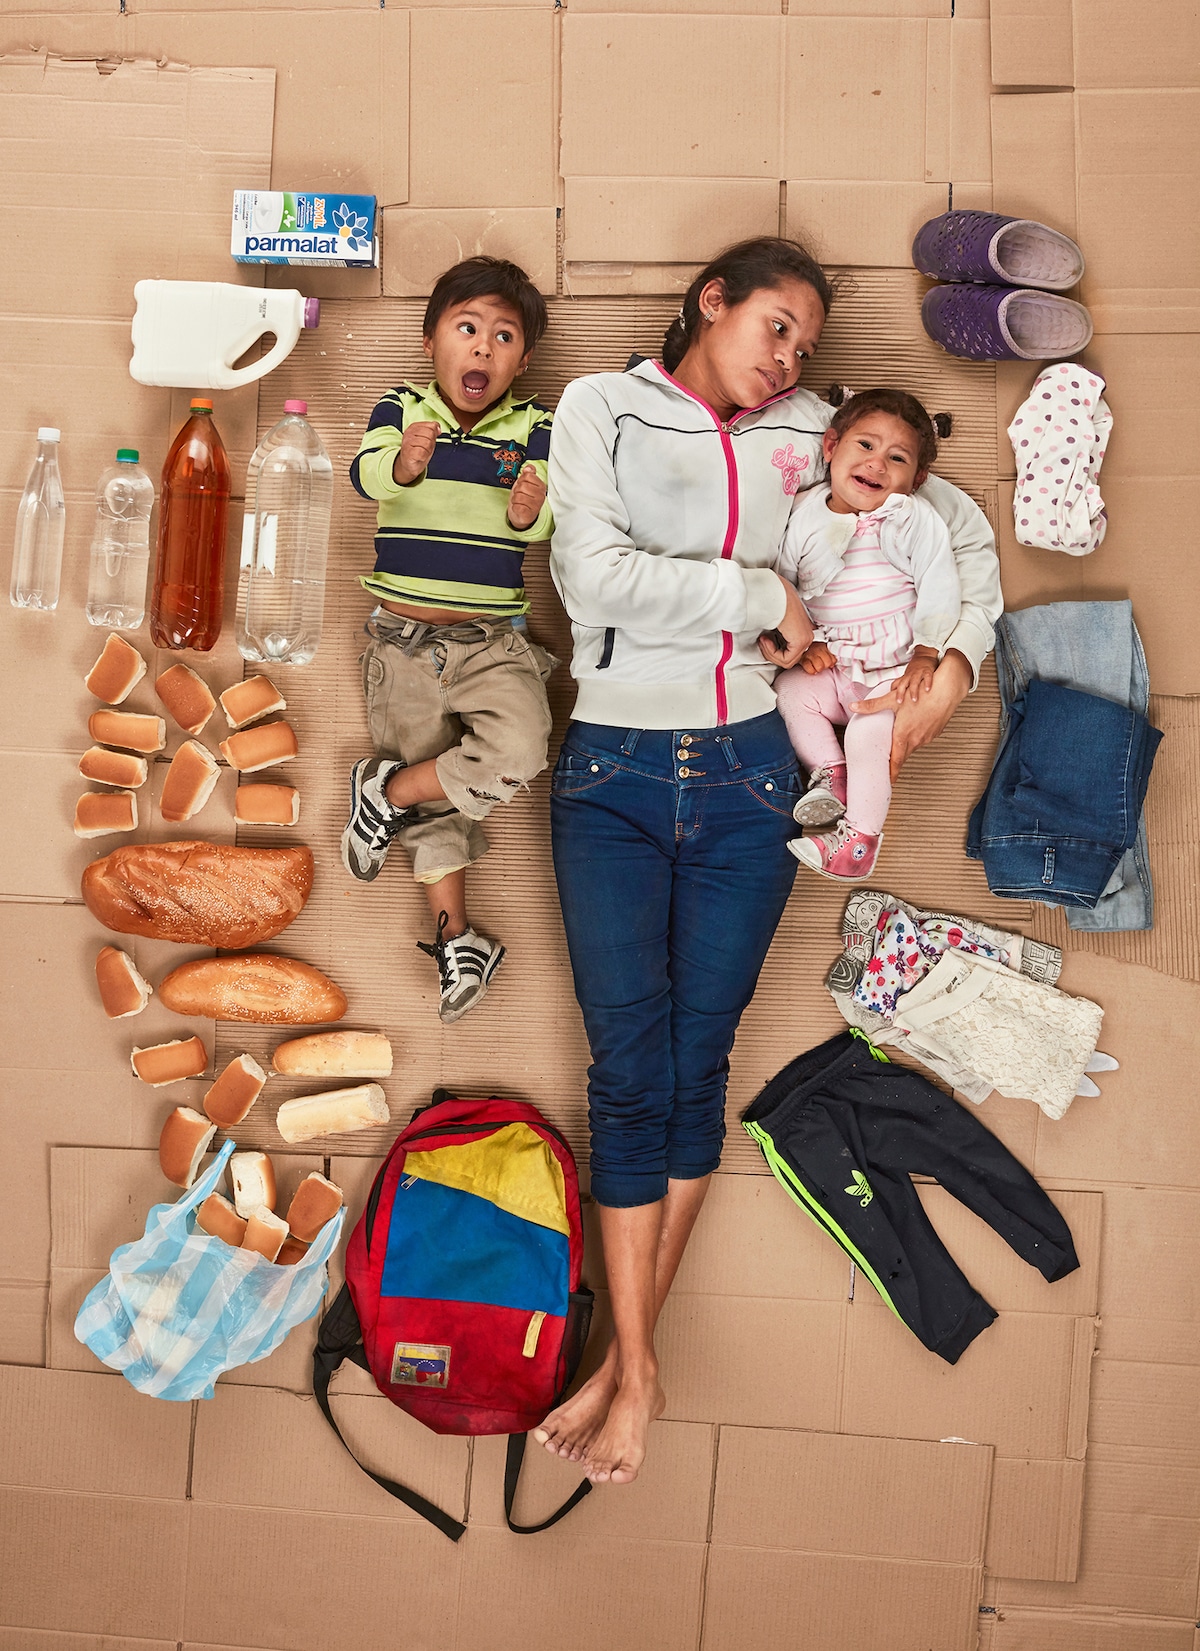 Photograph of Venezuelan Refugee Family by Gregg Segal